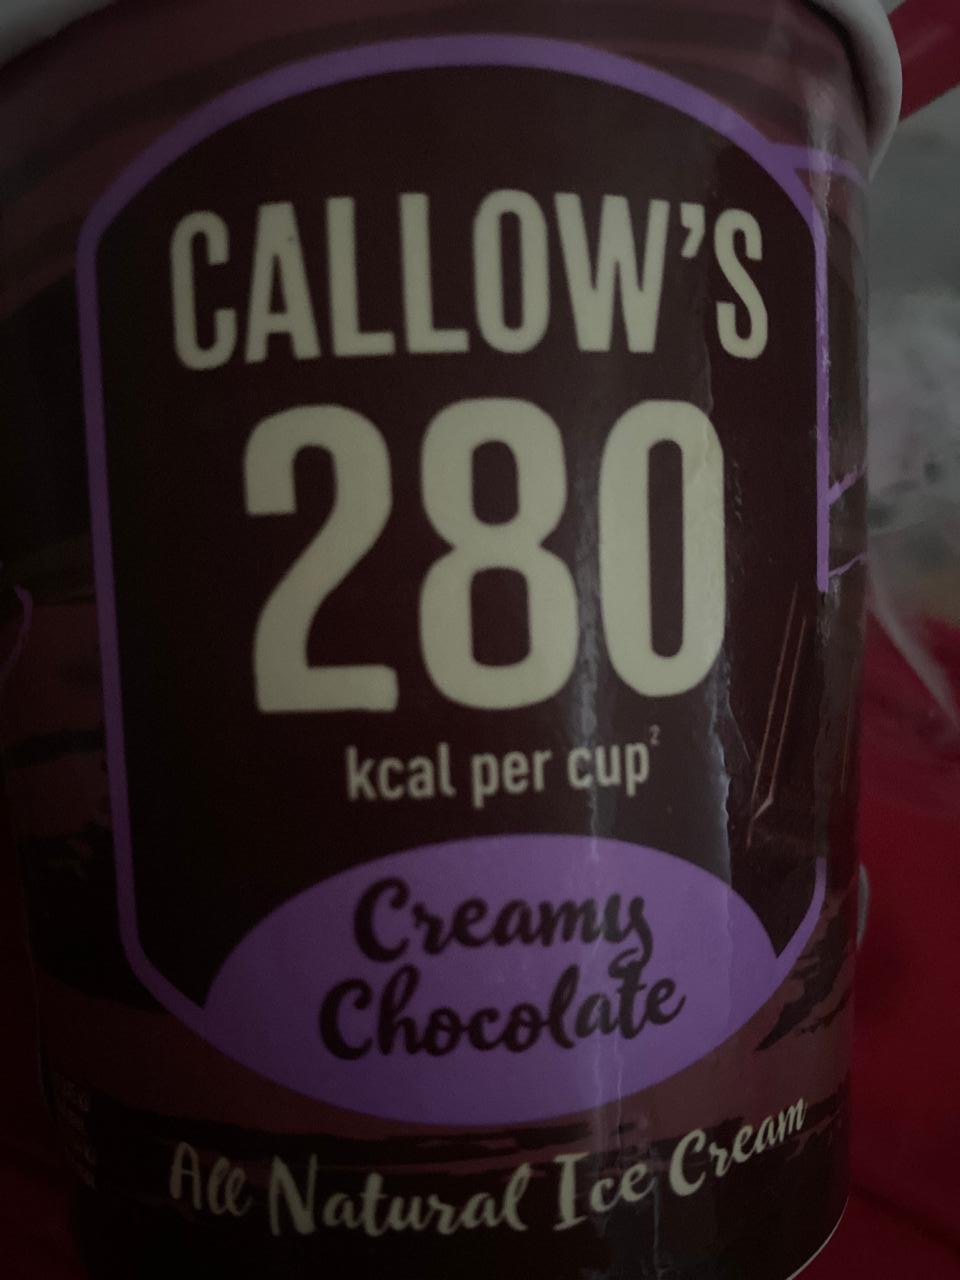 Fotografie - Callow's 280 creamy chocolate